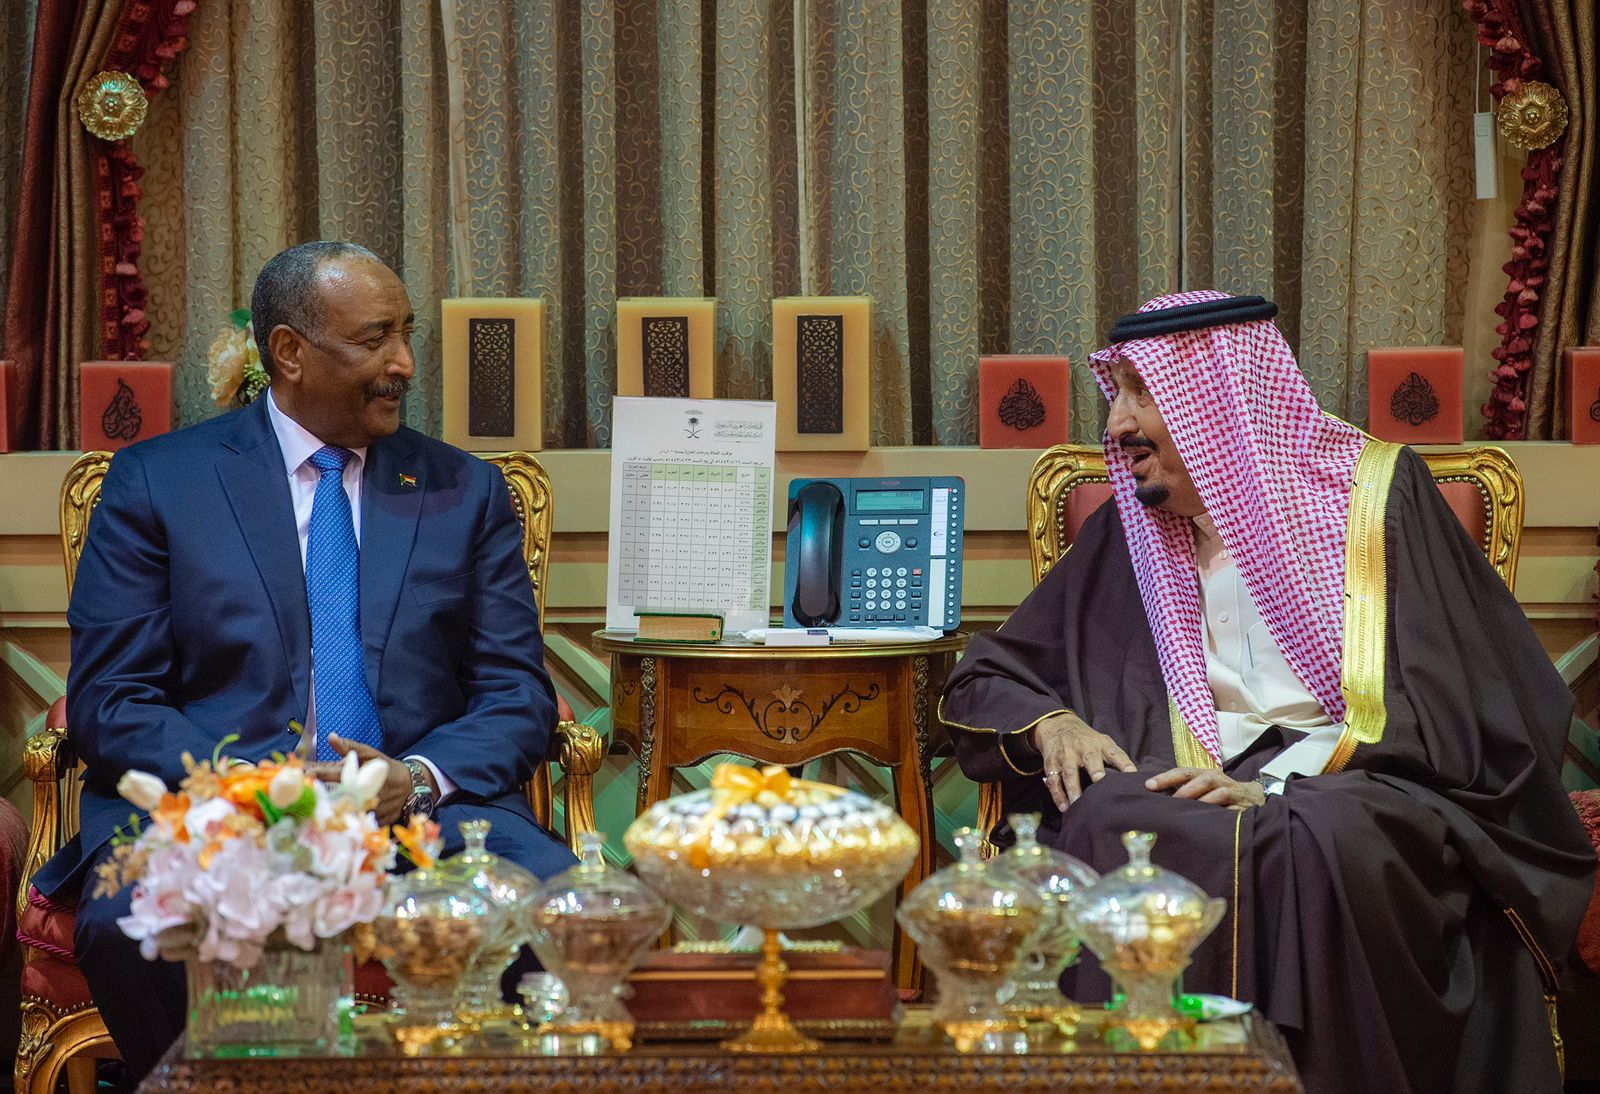 Saudi Arabia’s King Salman, crown prince receive Sudan’s sovereign council chief